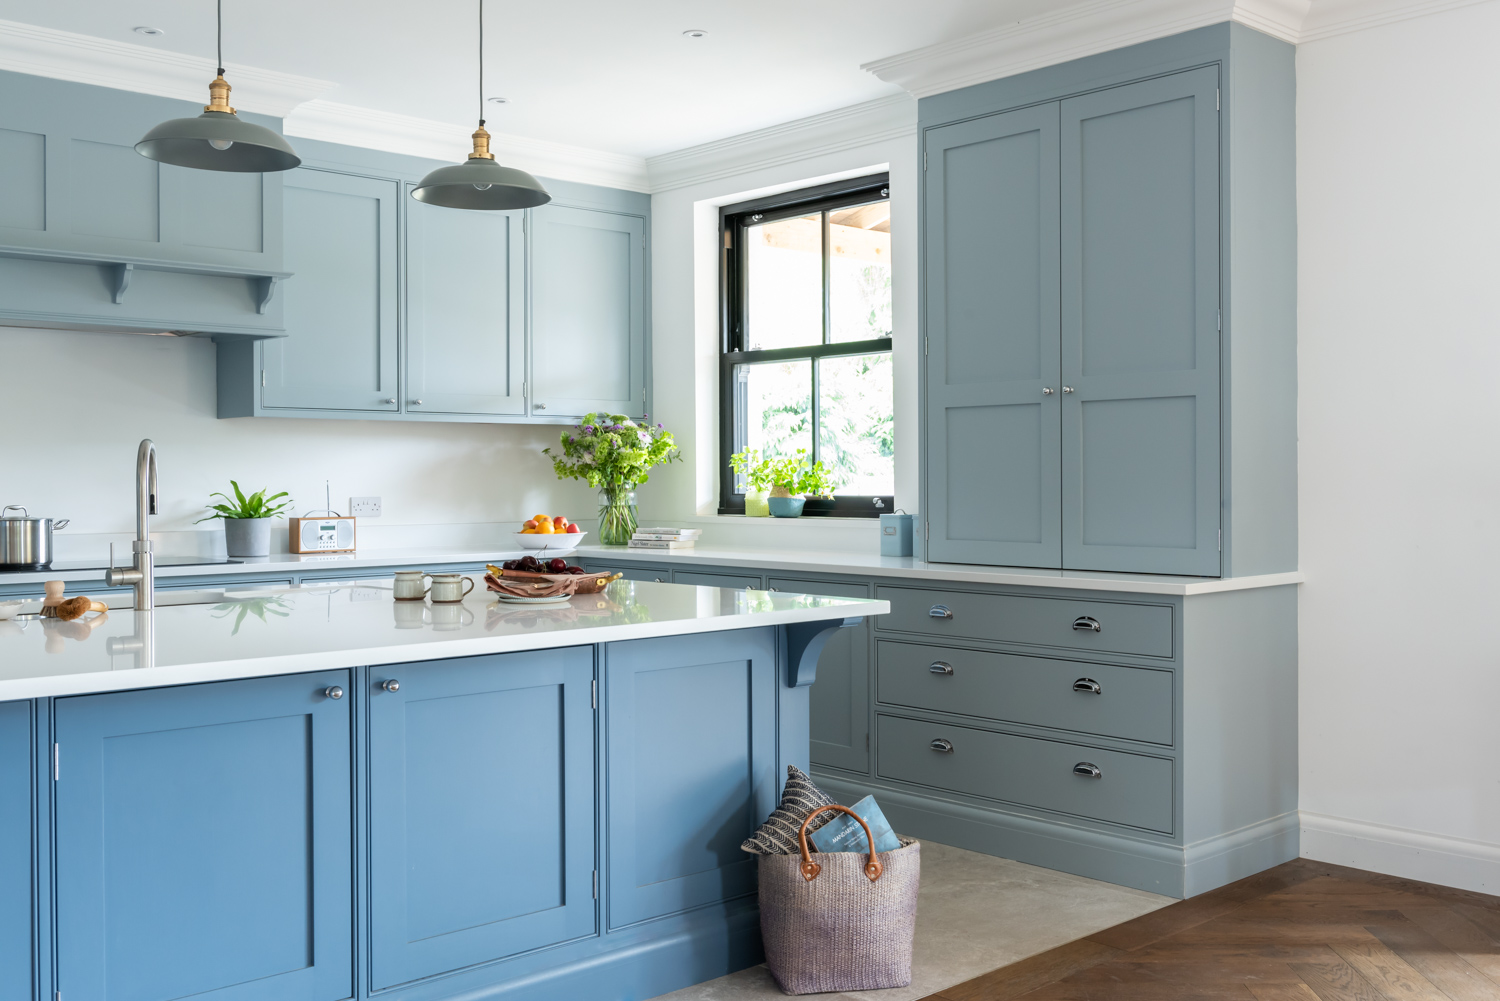 Shere Kitchens Bespoke, Best Idea Kitchen Cabinets Surrey Uk